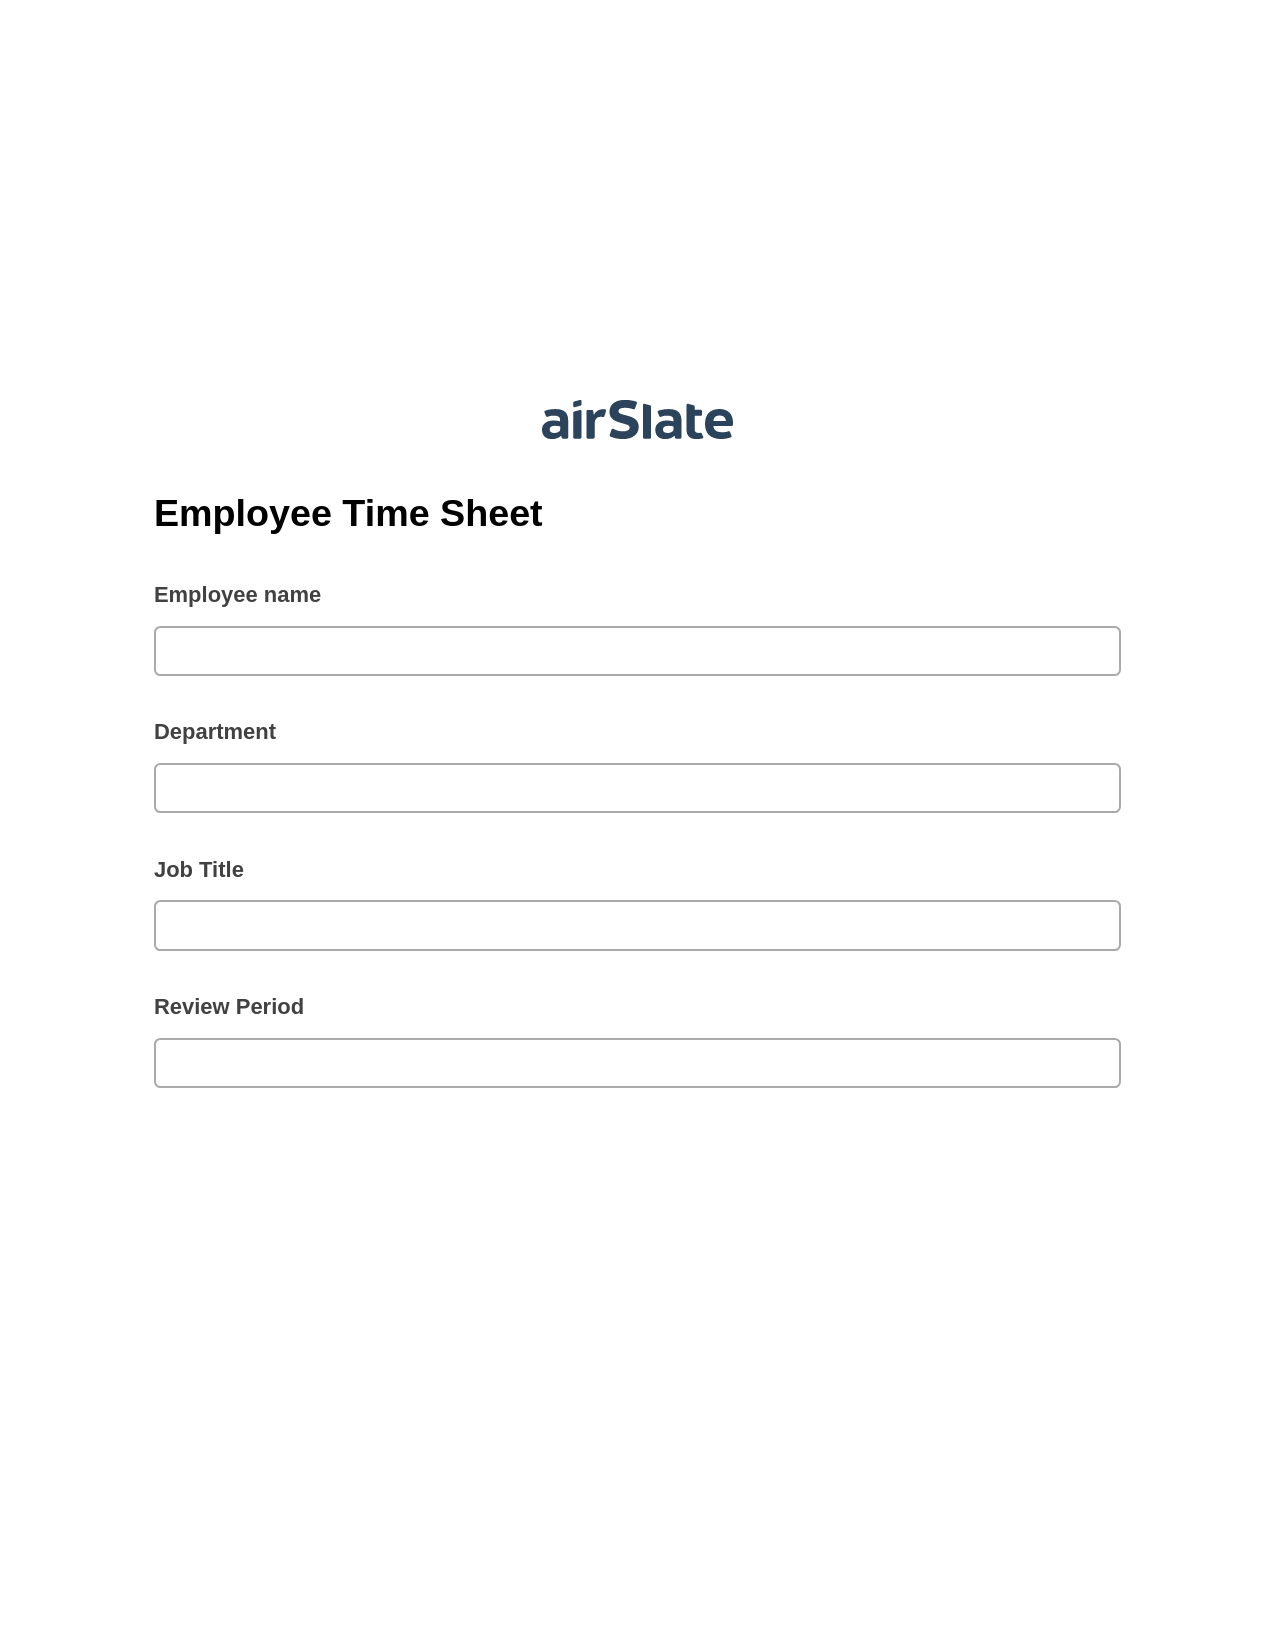 Multirole Employee Time Sheet Prefill from NetSuite records, Update Audit Trail Bot, Webhook Postfinish Bot